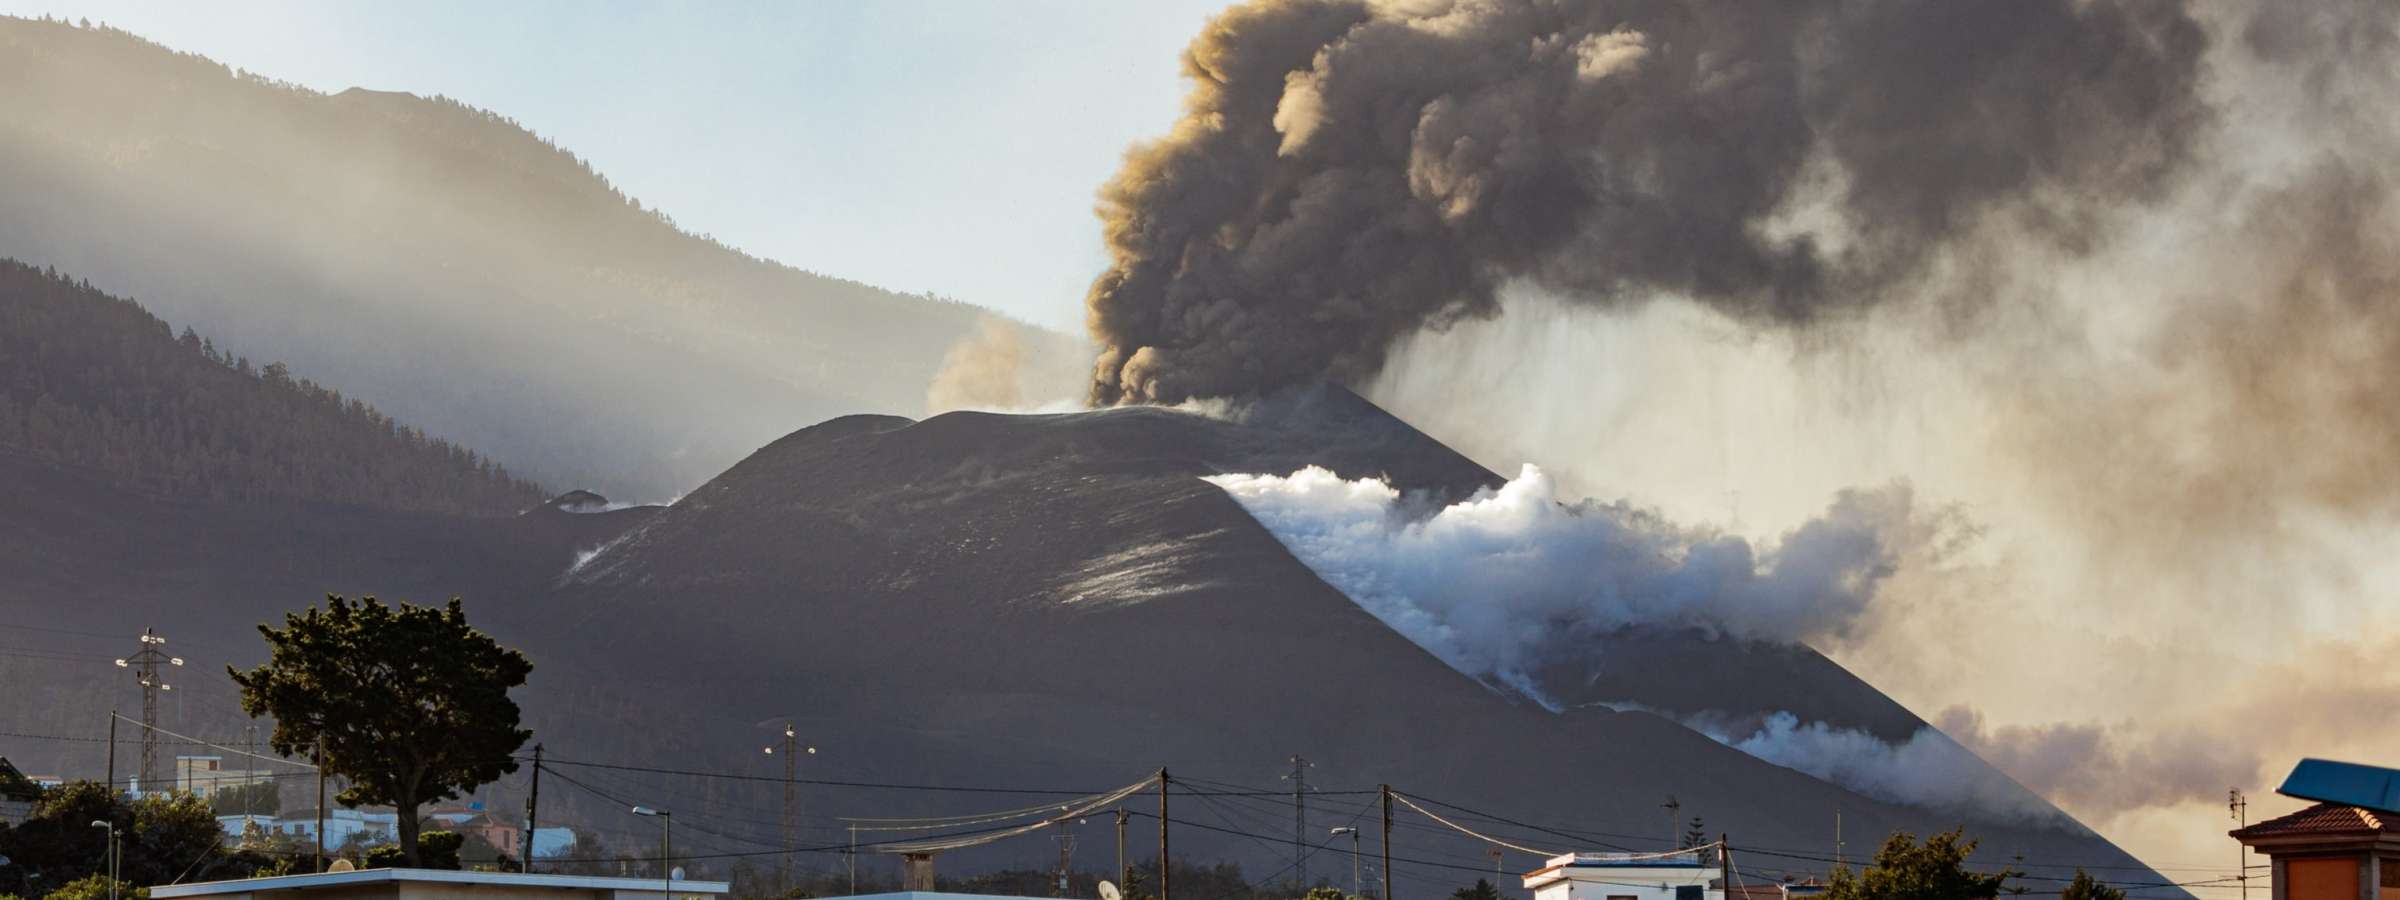 La Palma volcanic eruption in 2021